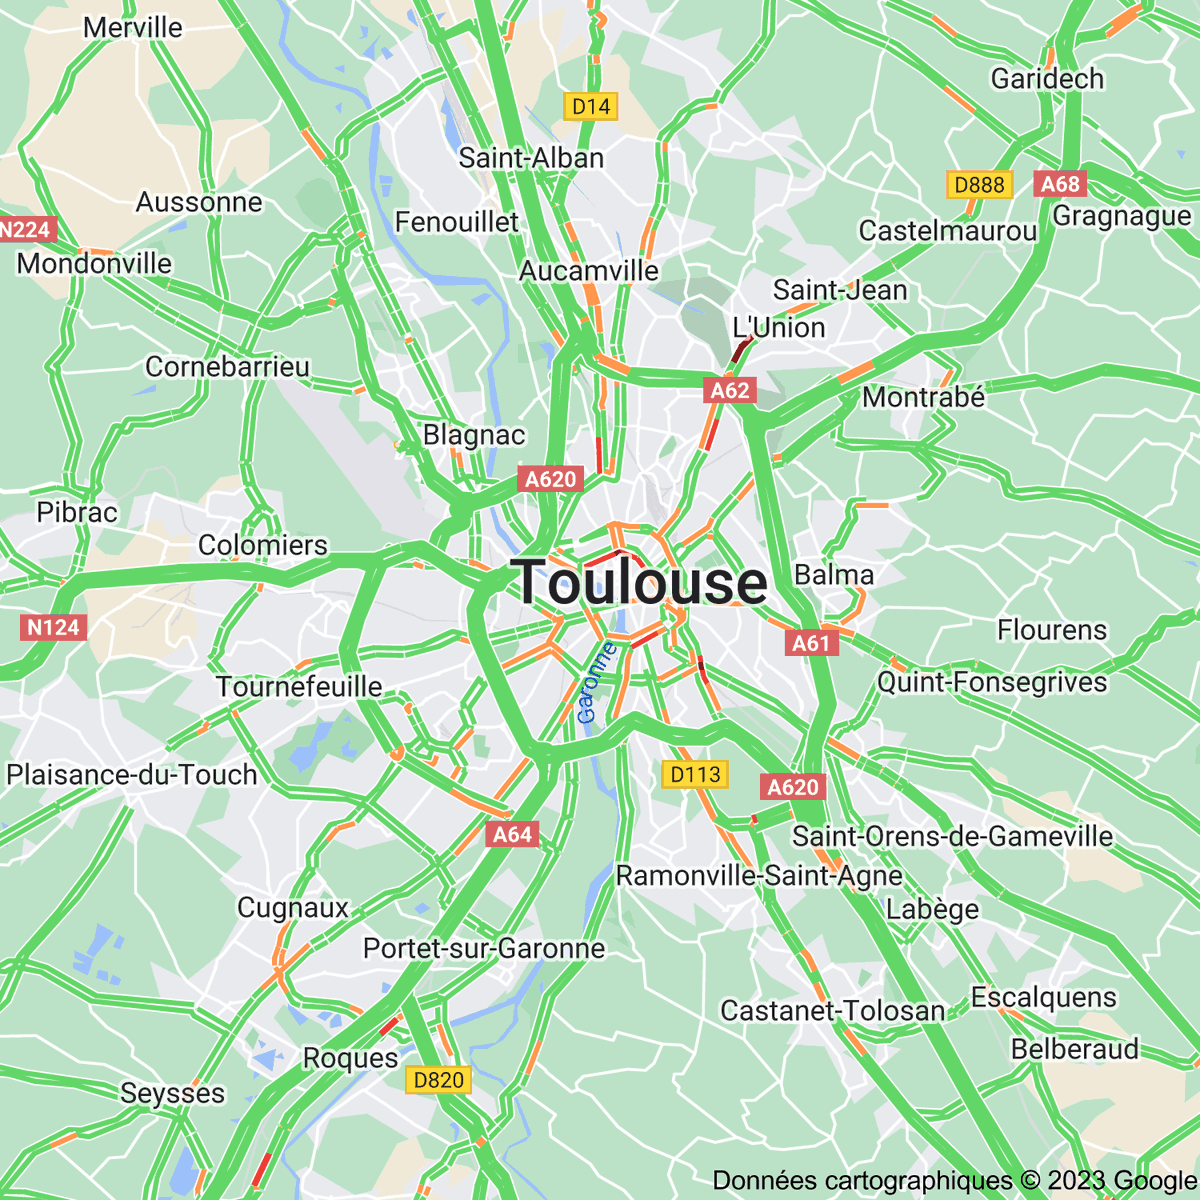 [FLASH 20:00] Trafic à Toulouse toulousetrafic.com #Toulouse #ToulousePeriph #InfoTrafic